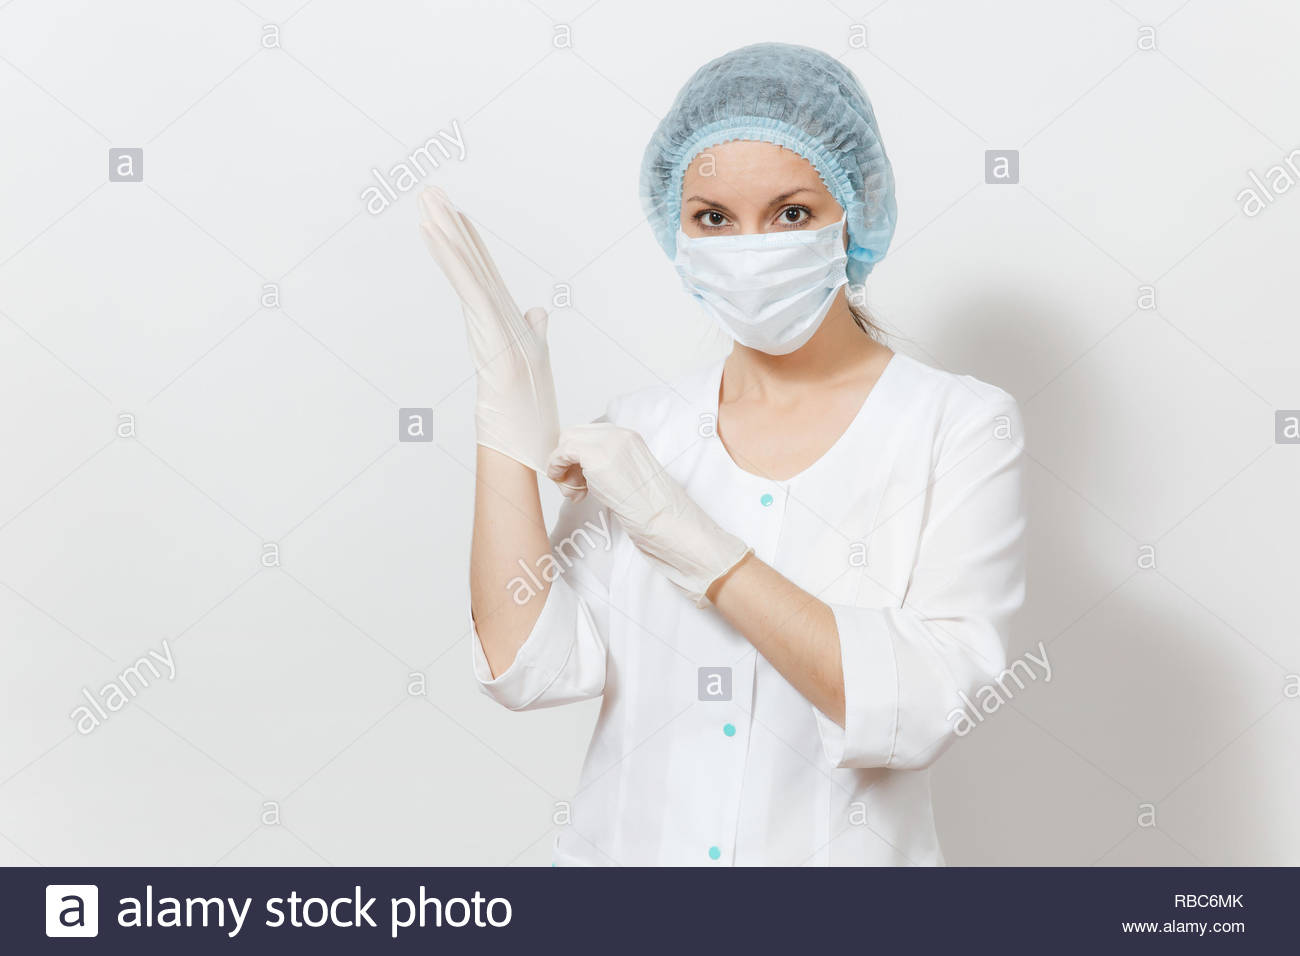 masque robe medical